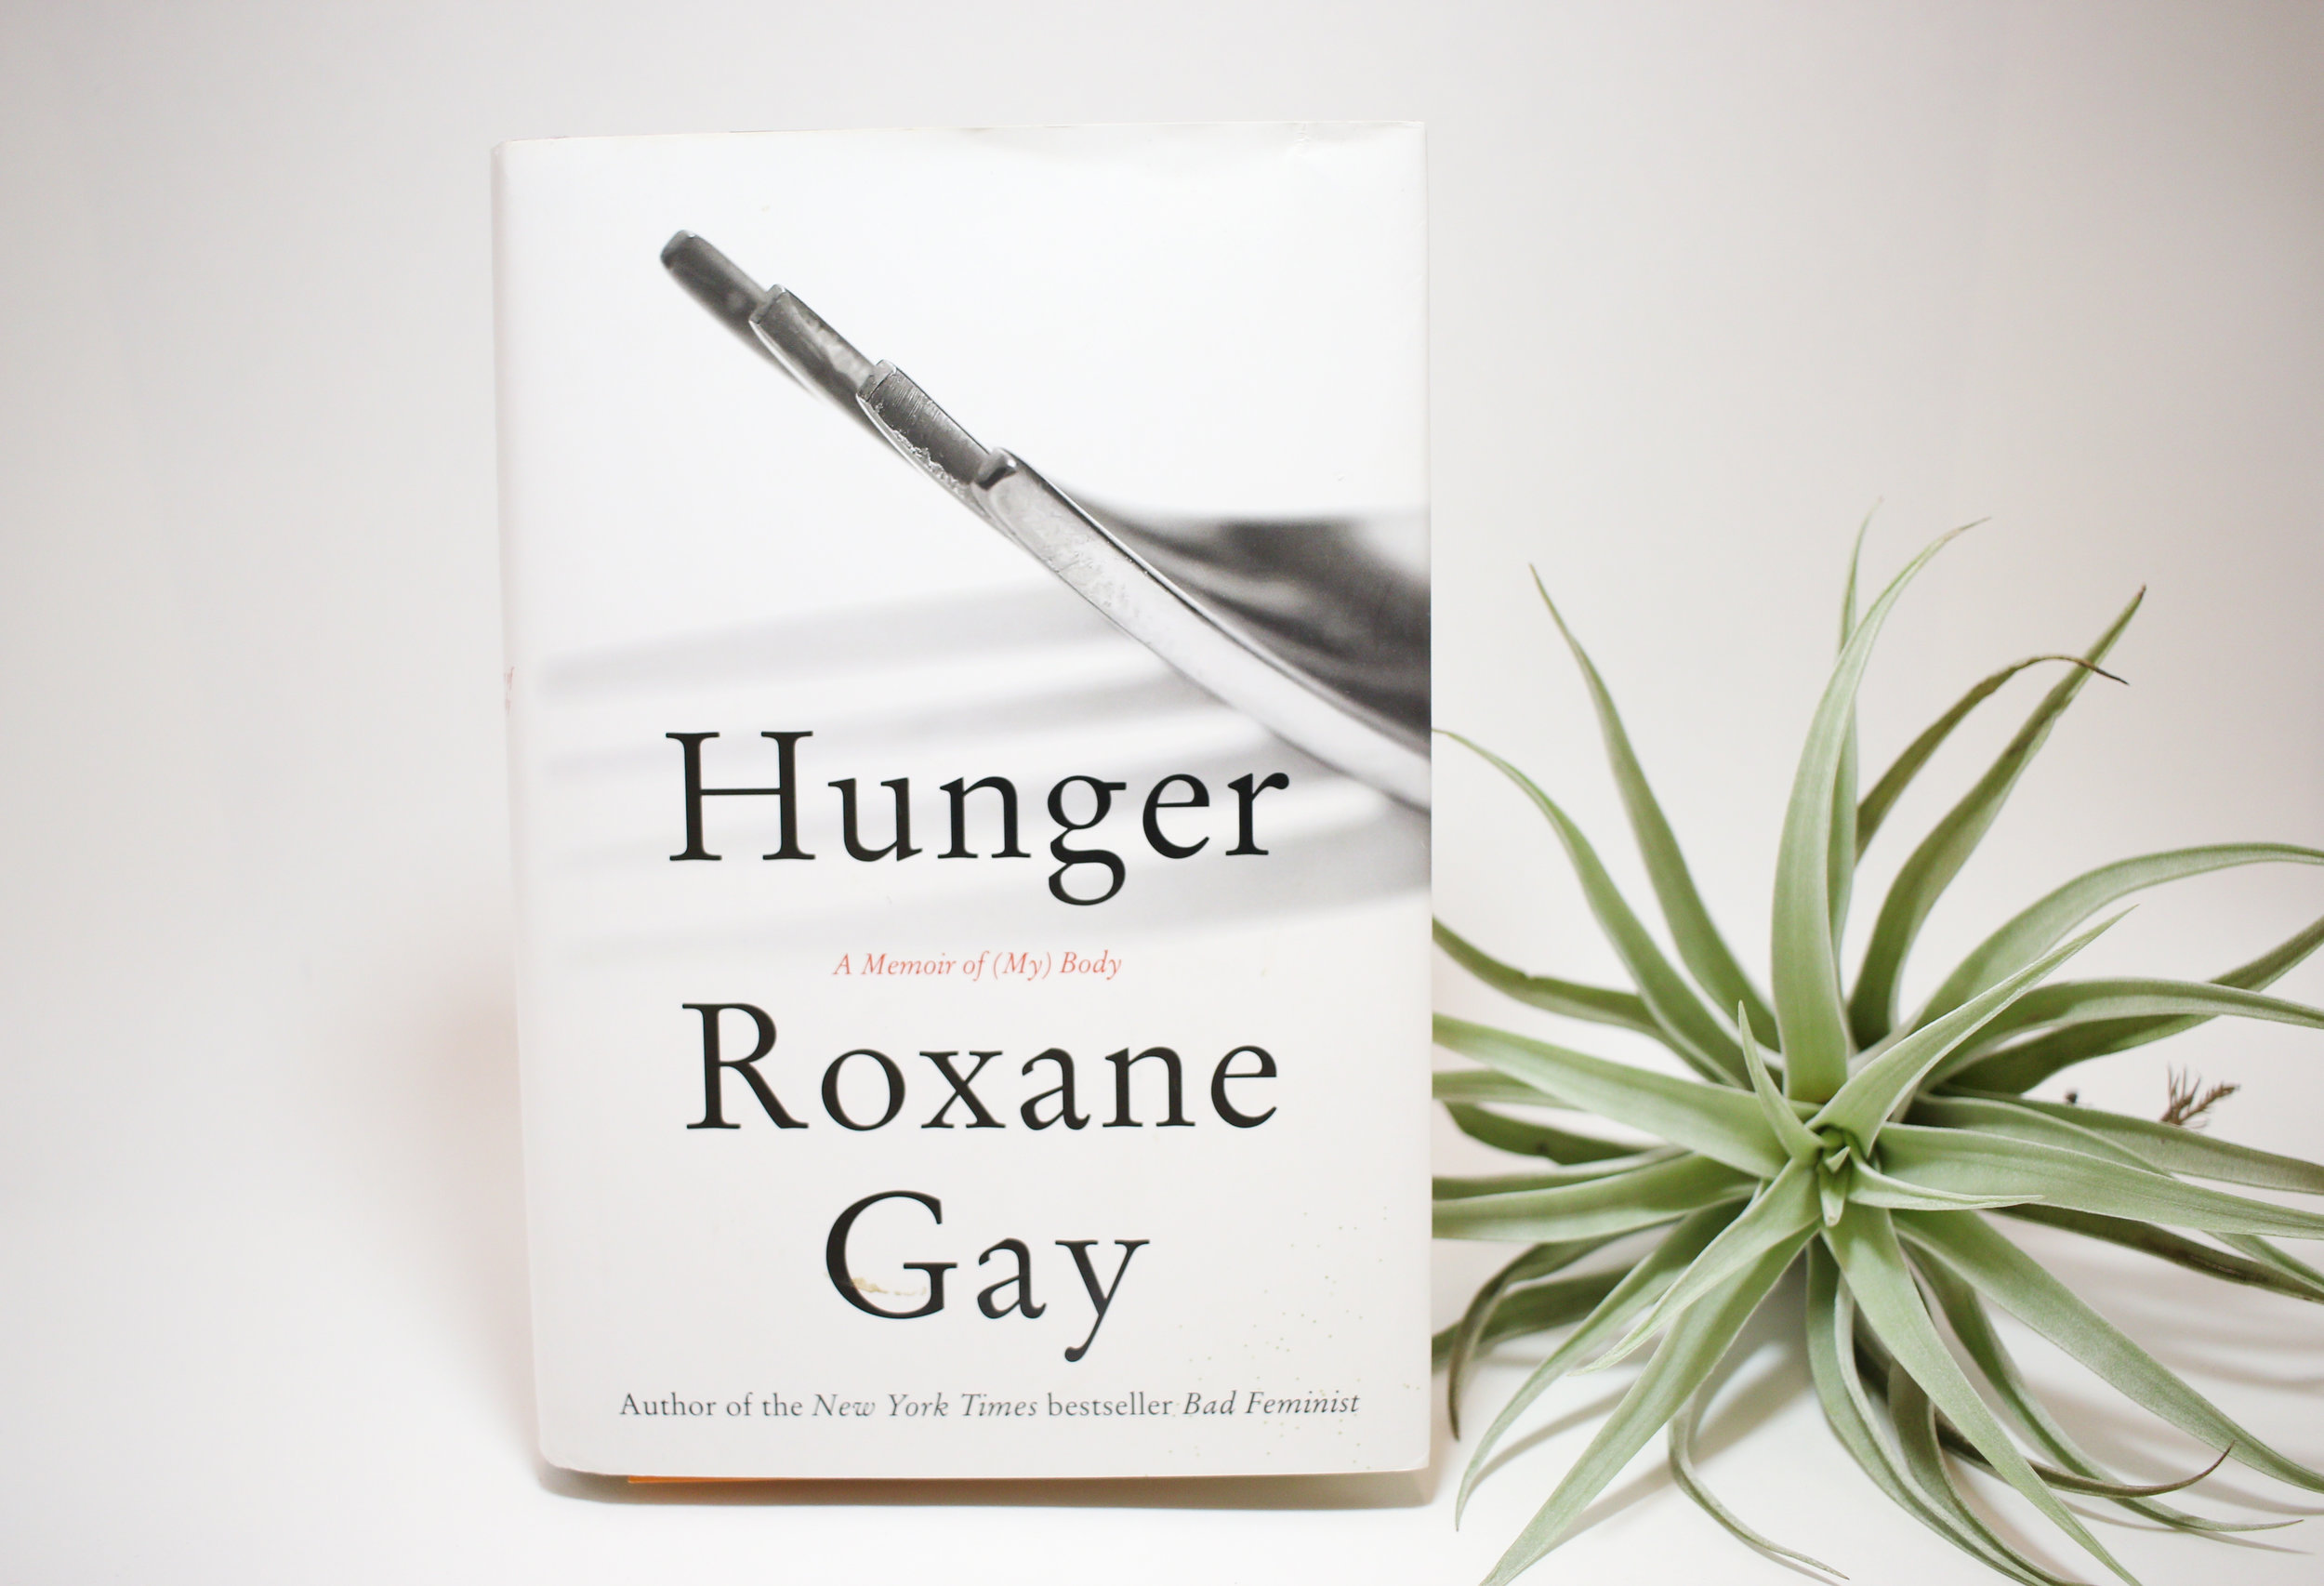 "Hunger" by Roxane Gay